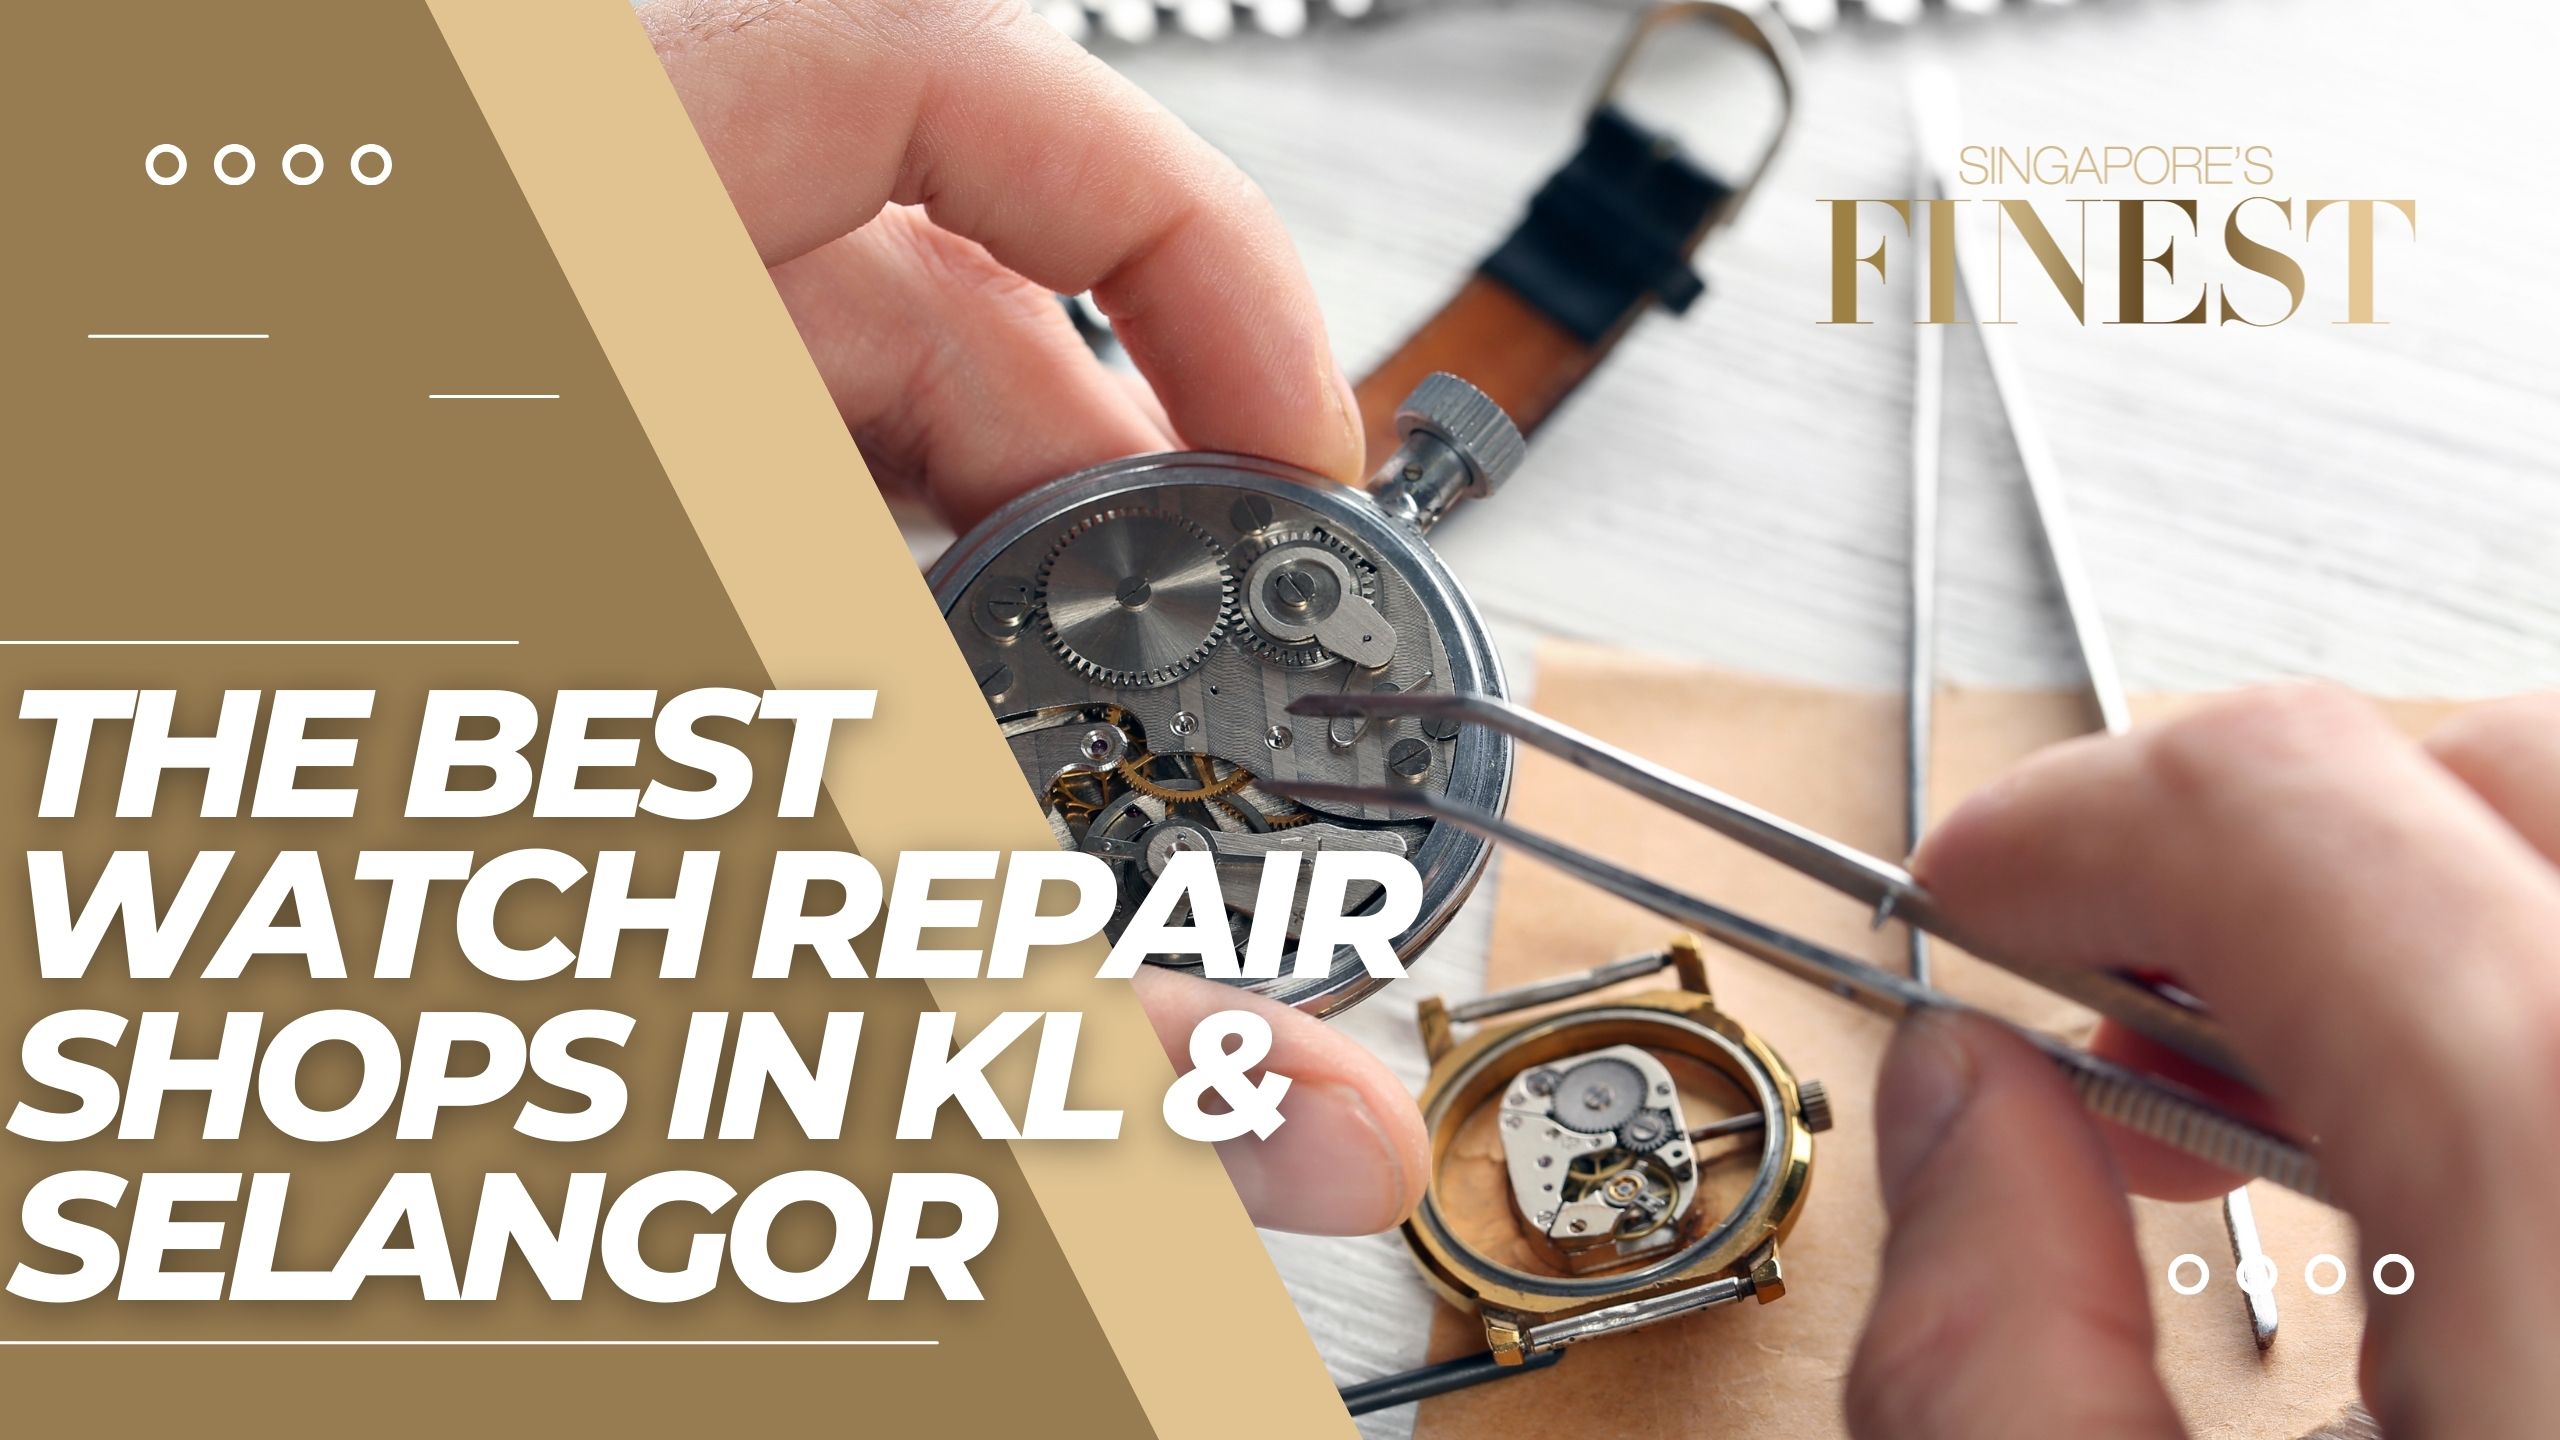 The Finest Watch Repair Shops in KL & Selangor